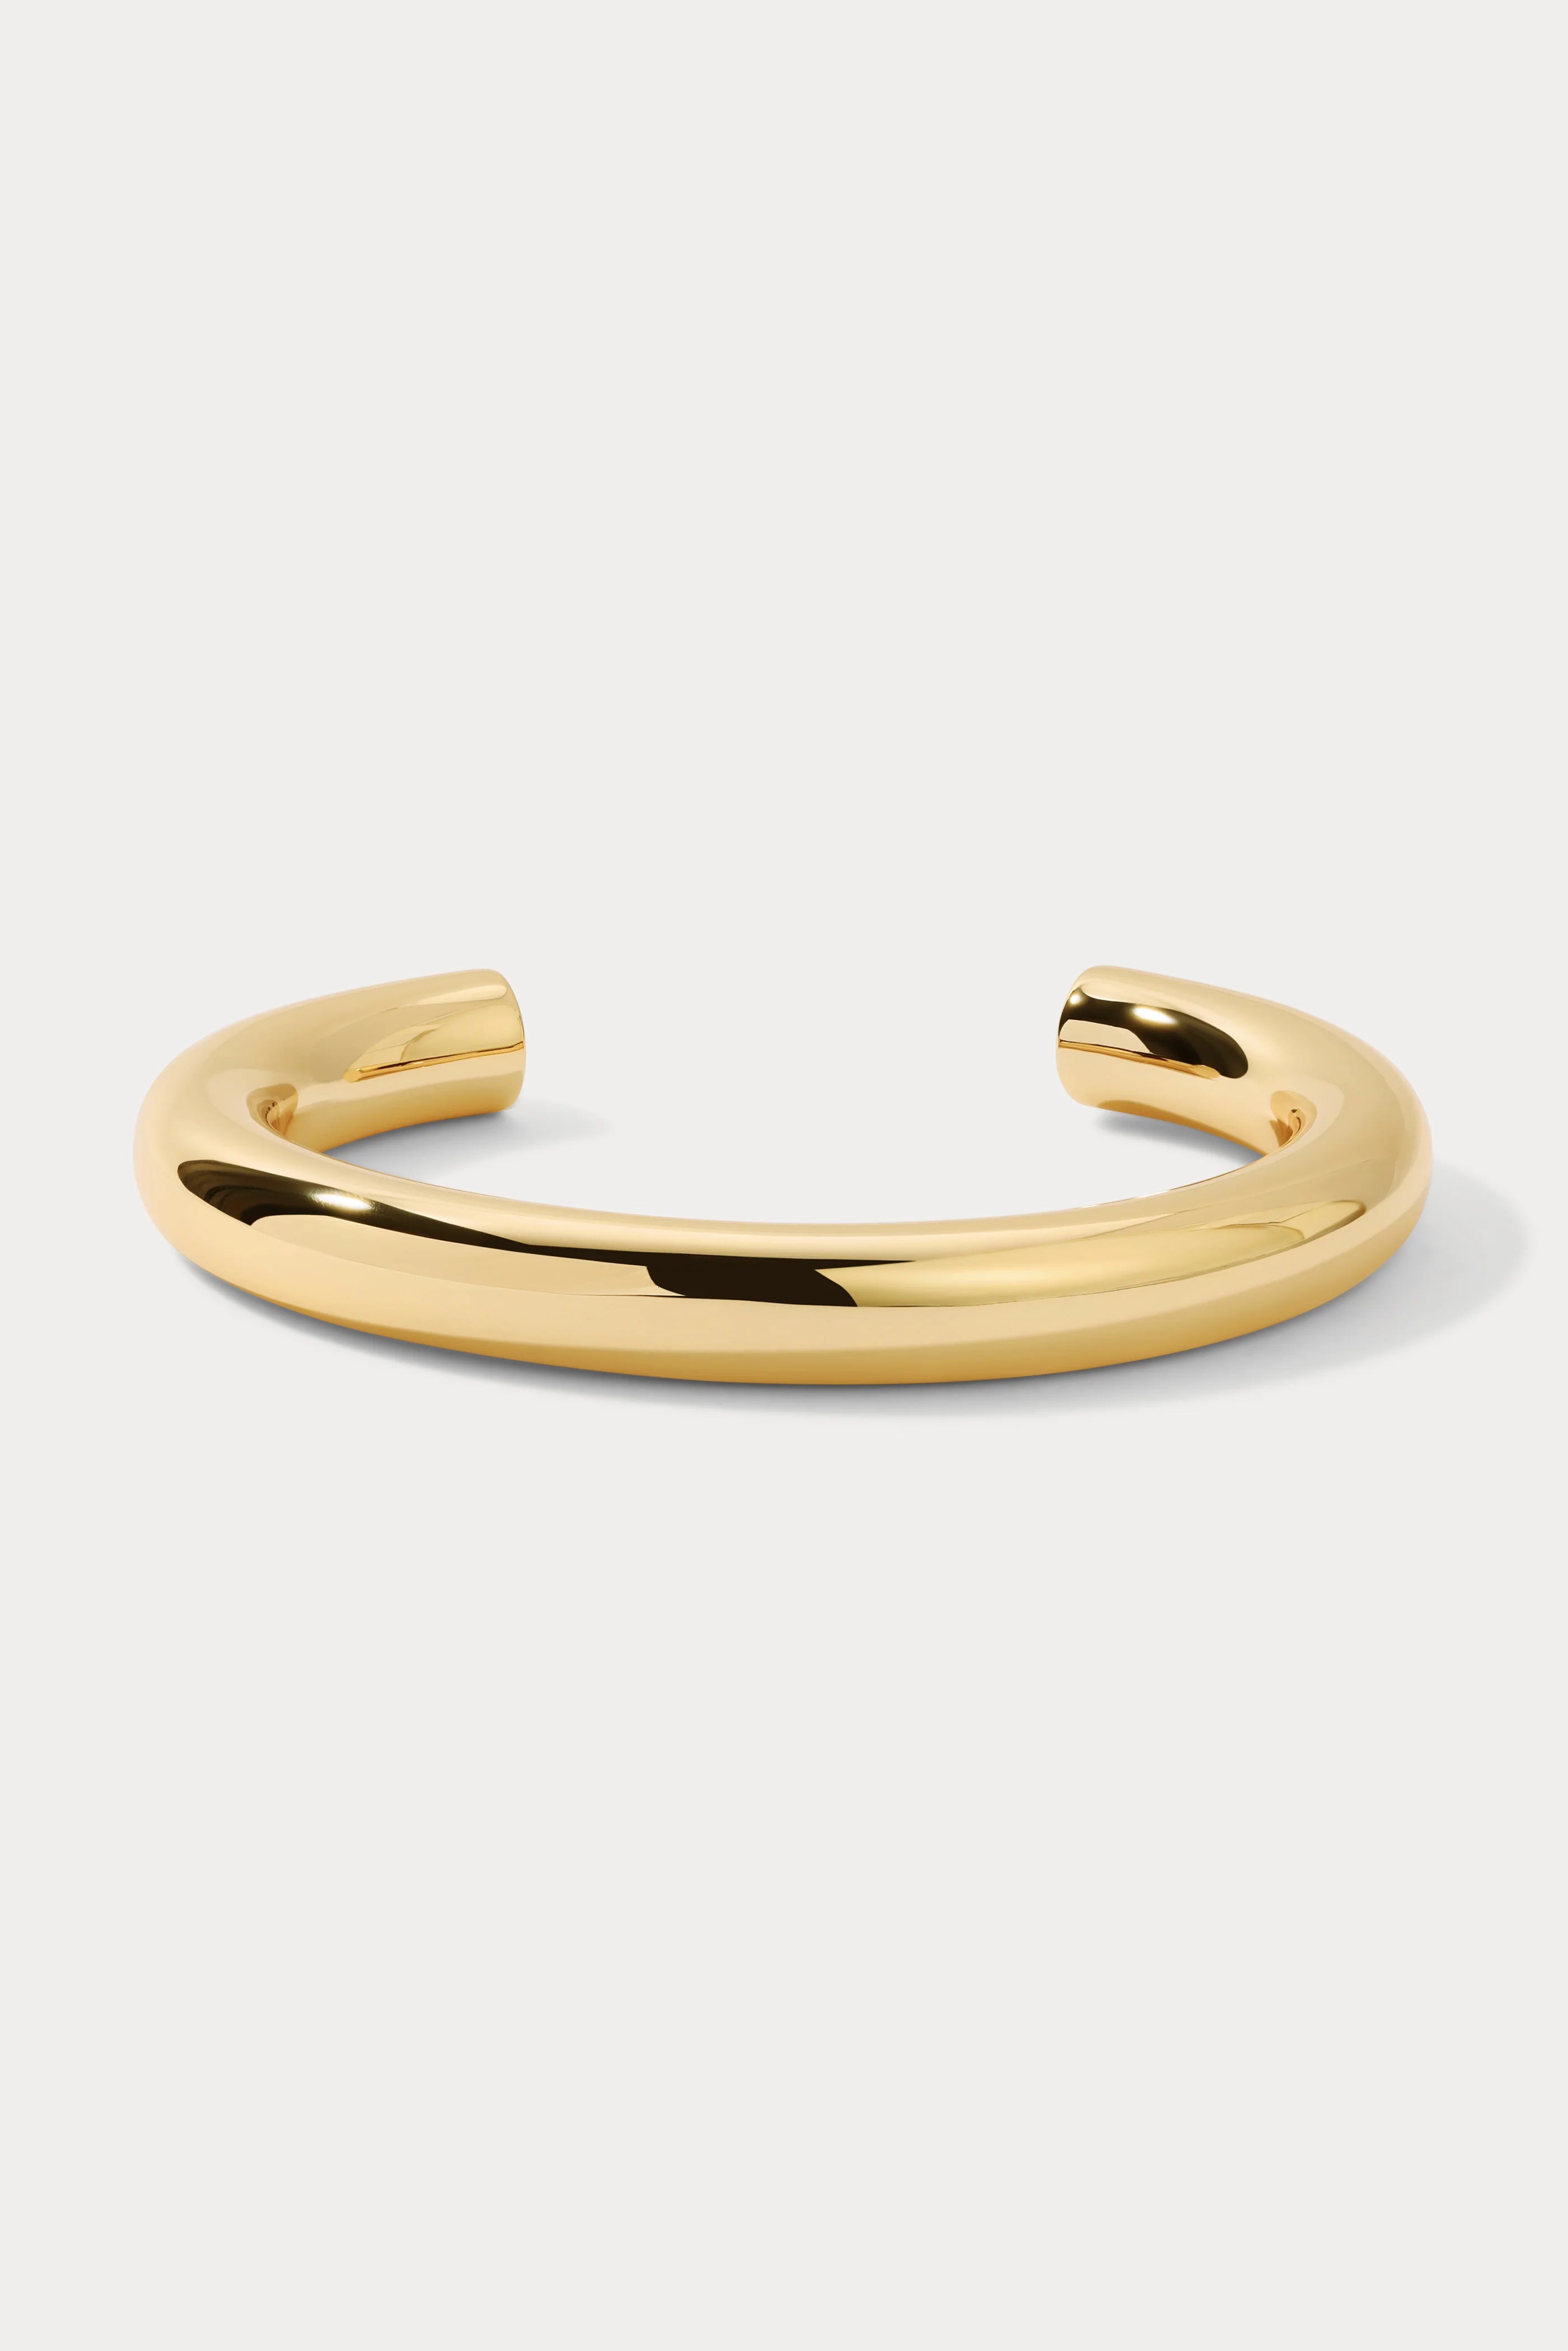 Lili Claspe Medium Sloane Hollow Cuff Bracelet - Gold